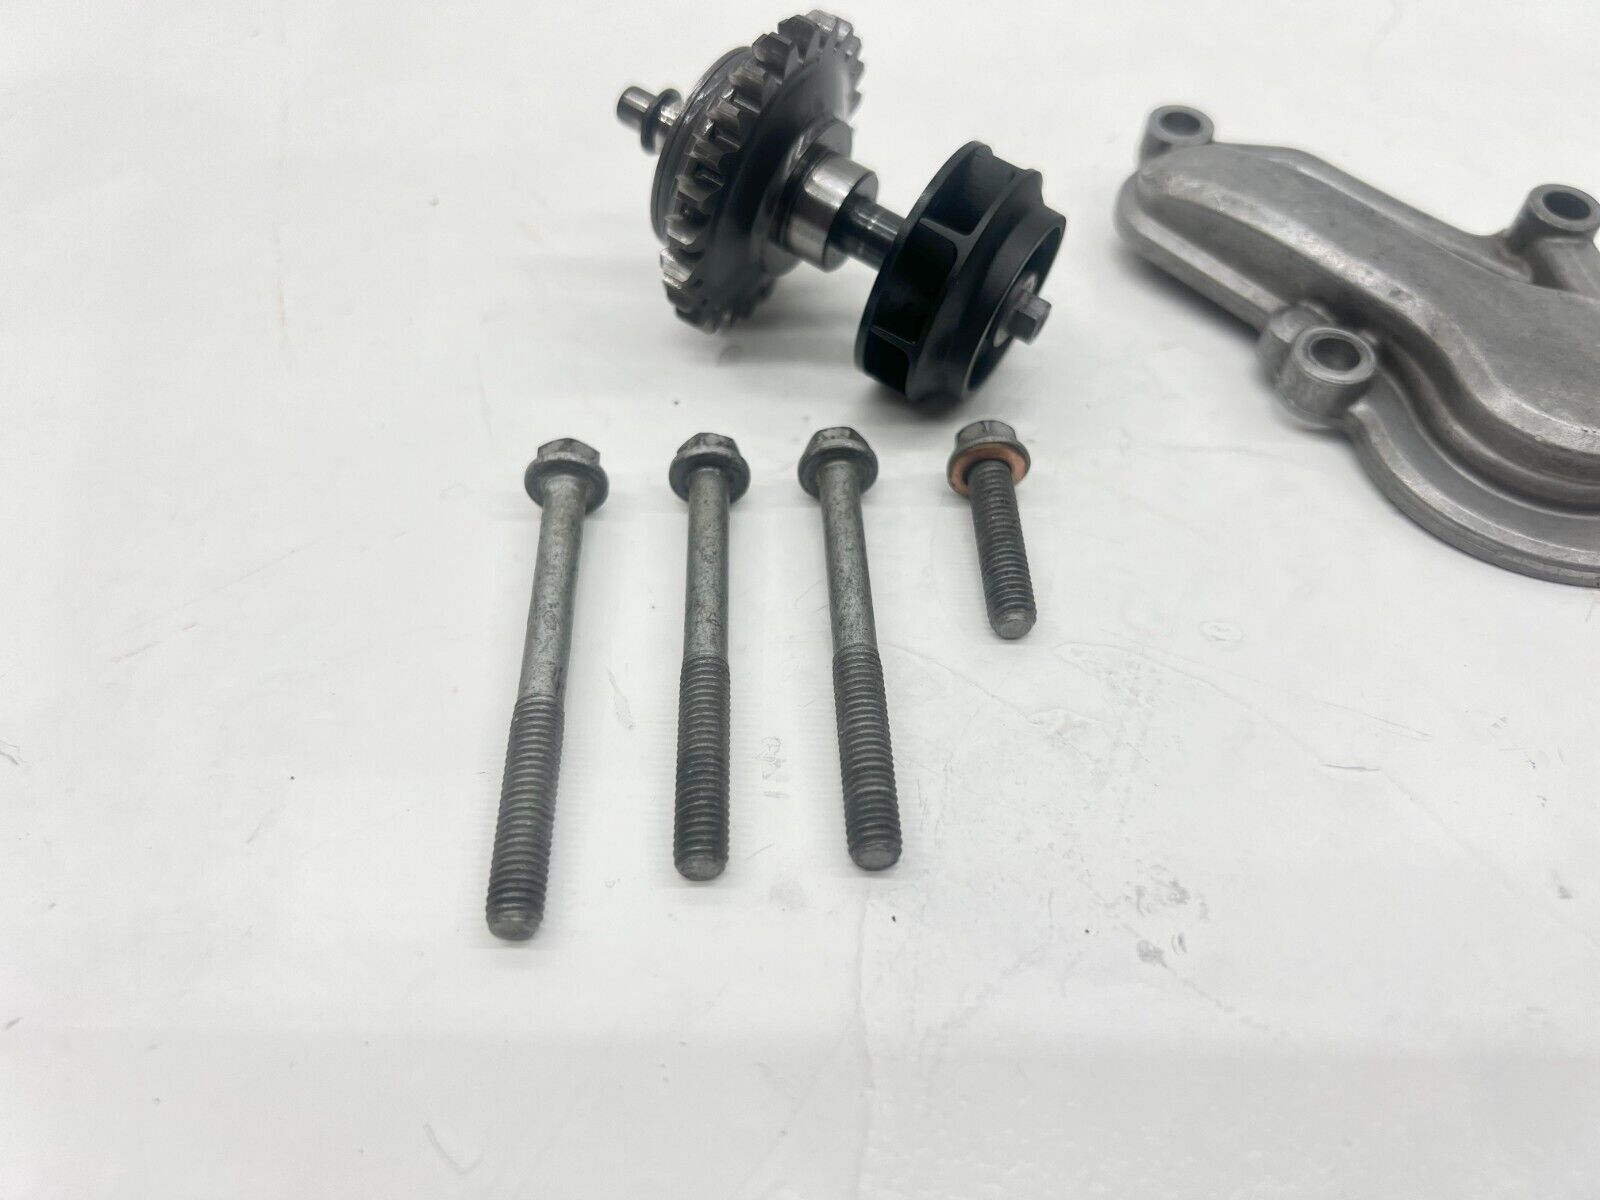 2018 KTM 85 105 SX Water Pump Impeller Gear Cover Kit Bolts Assembly Husqvarna